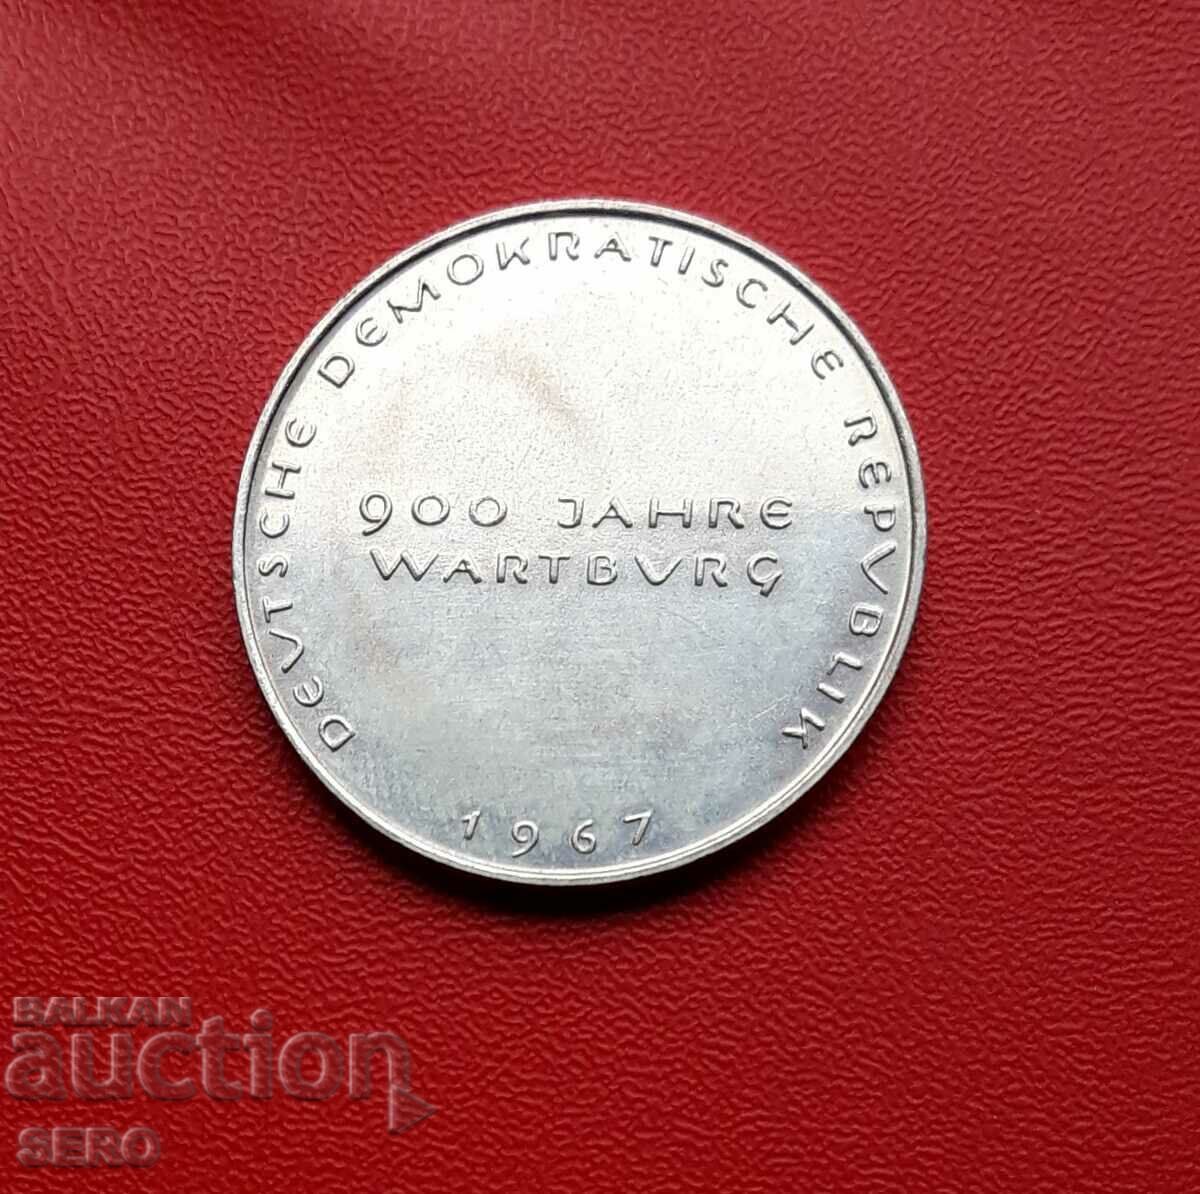 Germania-GDR-medalie 1967-900 Castelul Wartburg 1067-1967